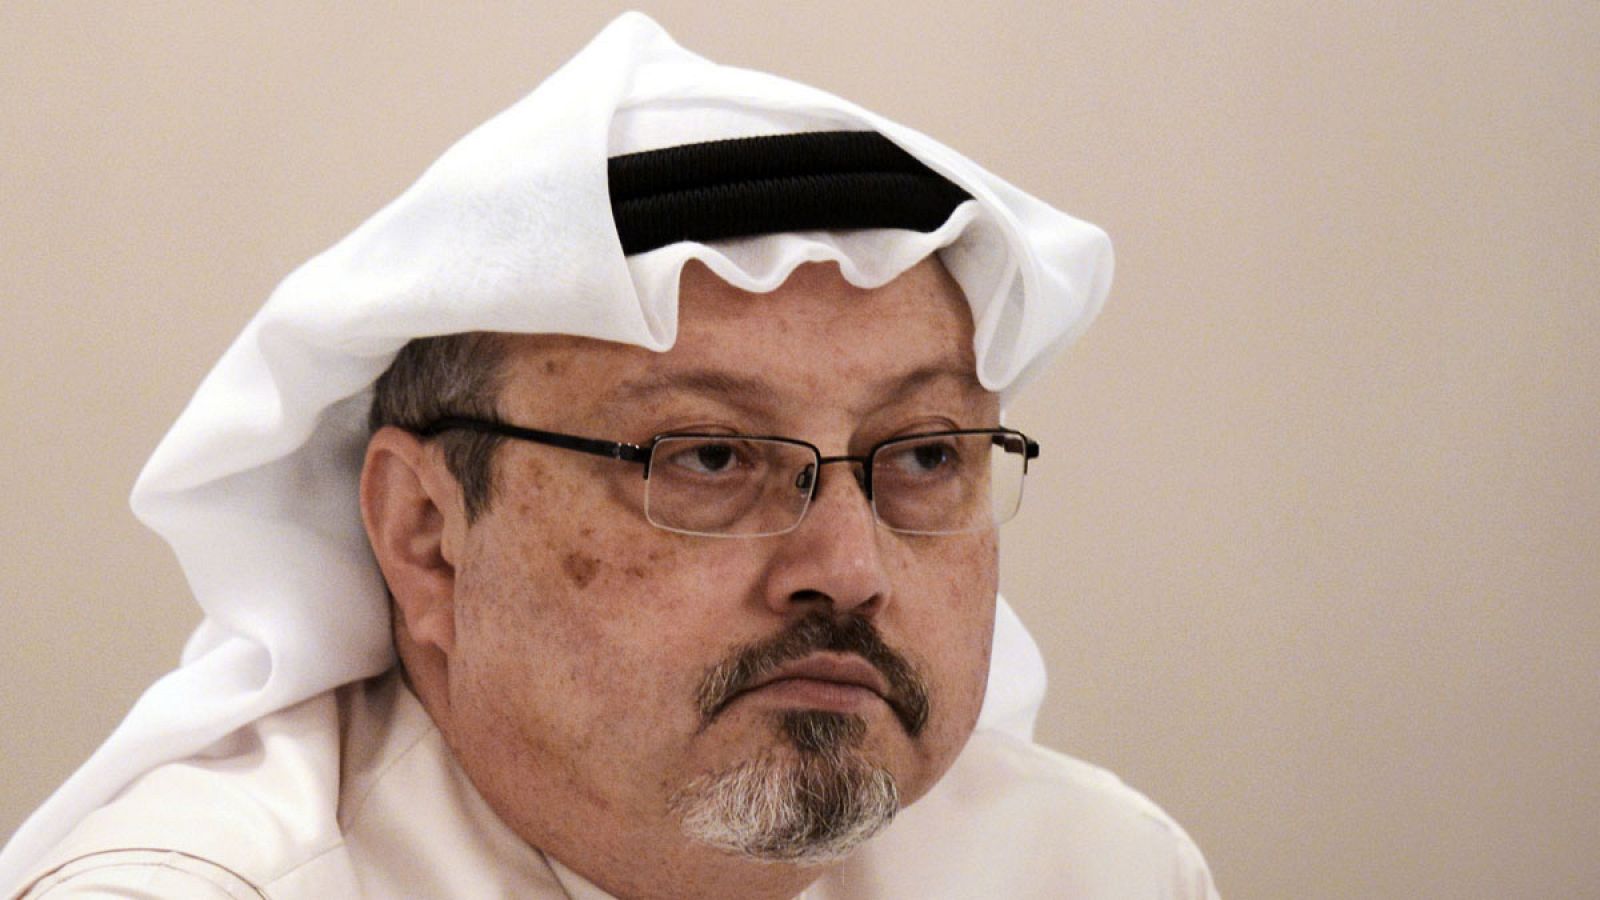 El periodista saudí Jamal Khashoggi en una imagen de diciembre de 2014.